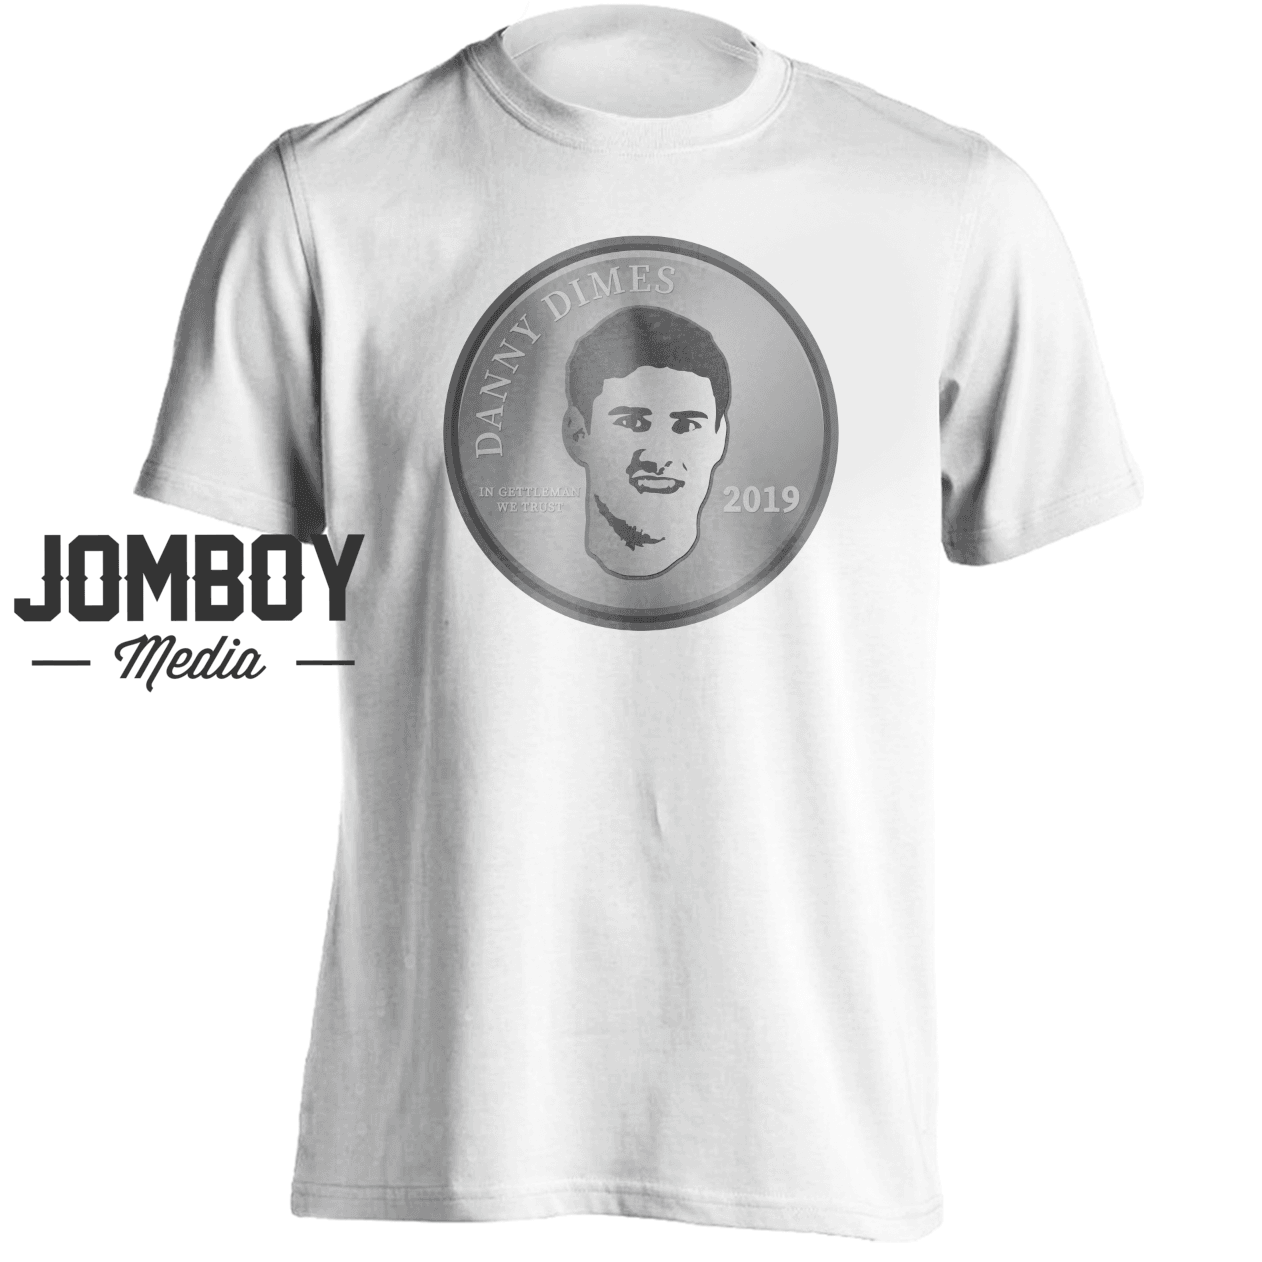 Danny Dimes - T-Shirt - Jomboy Media